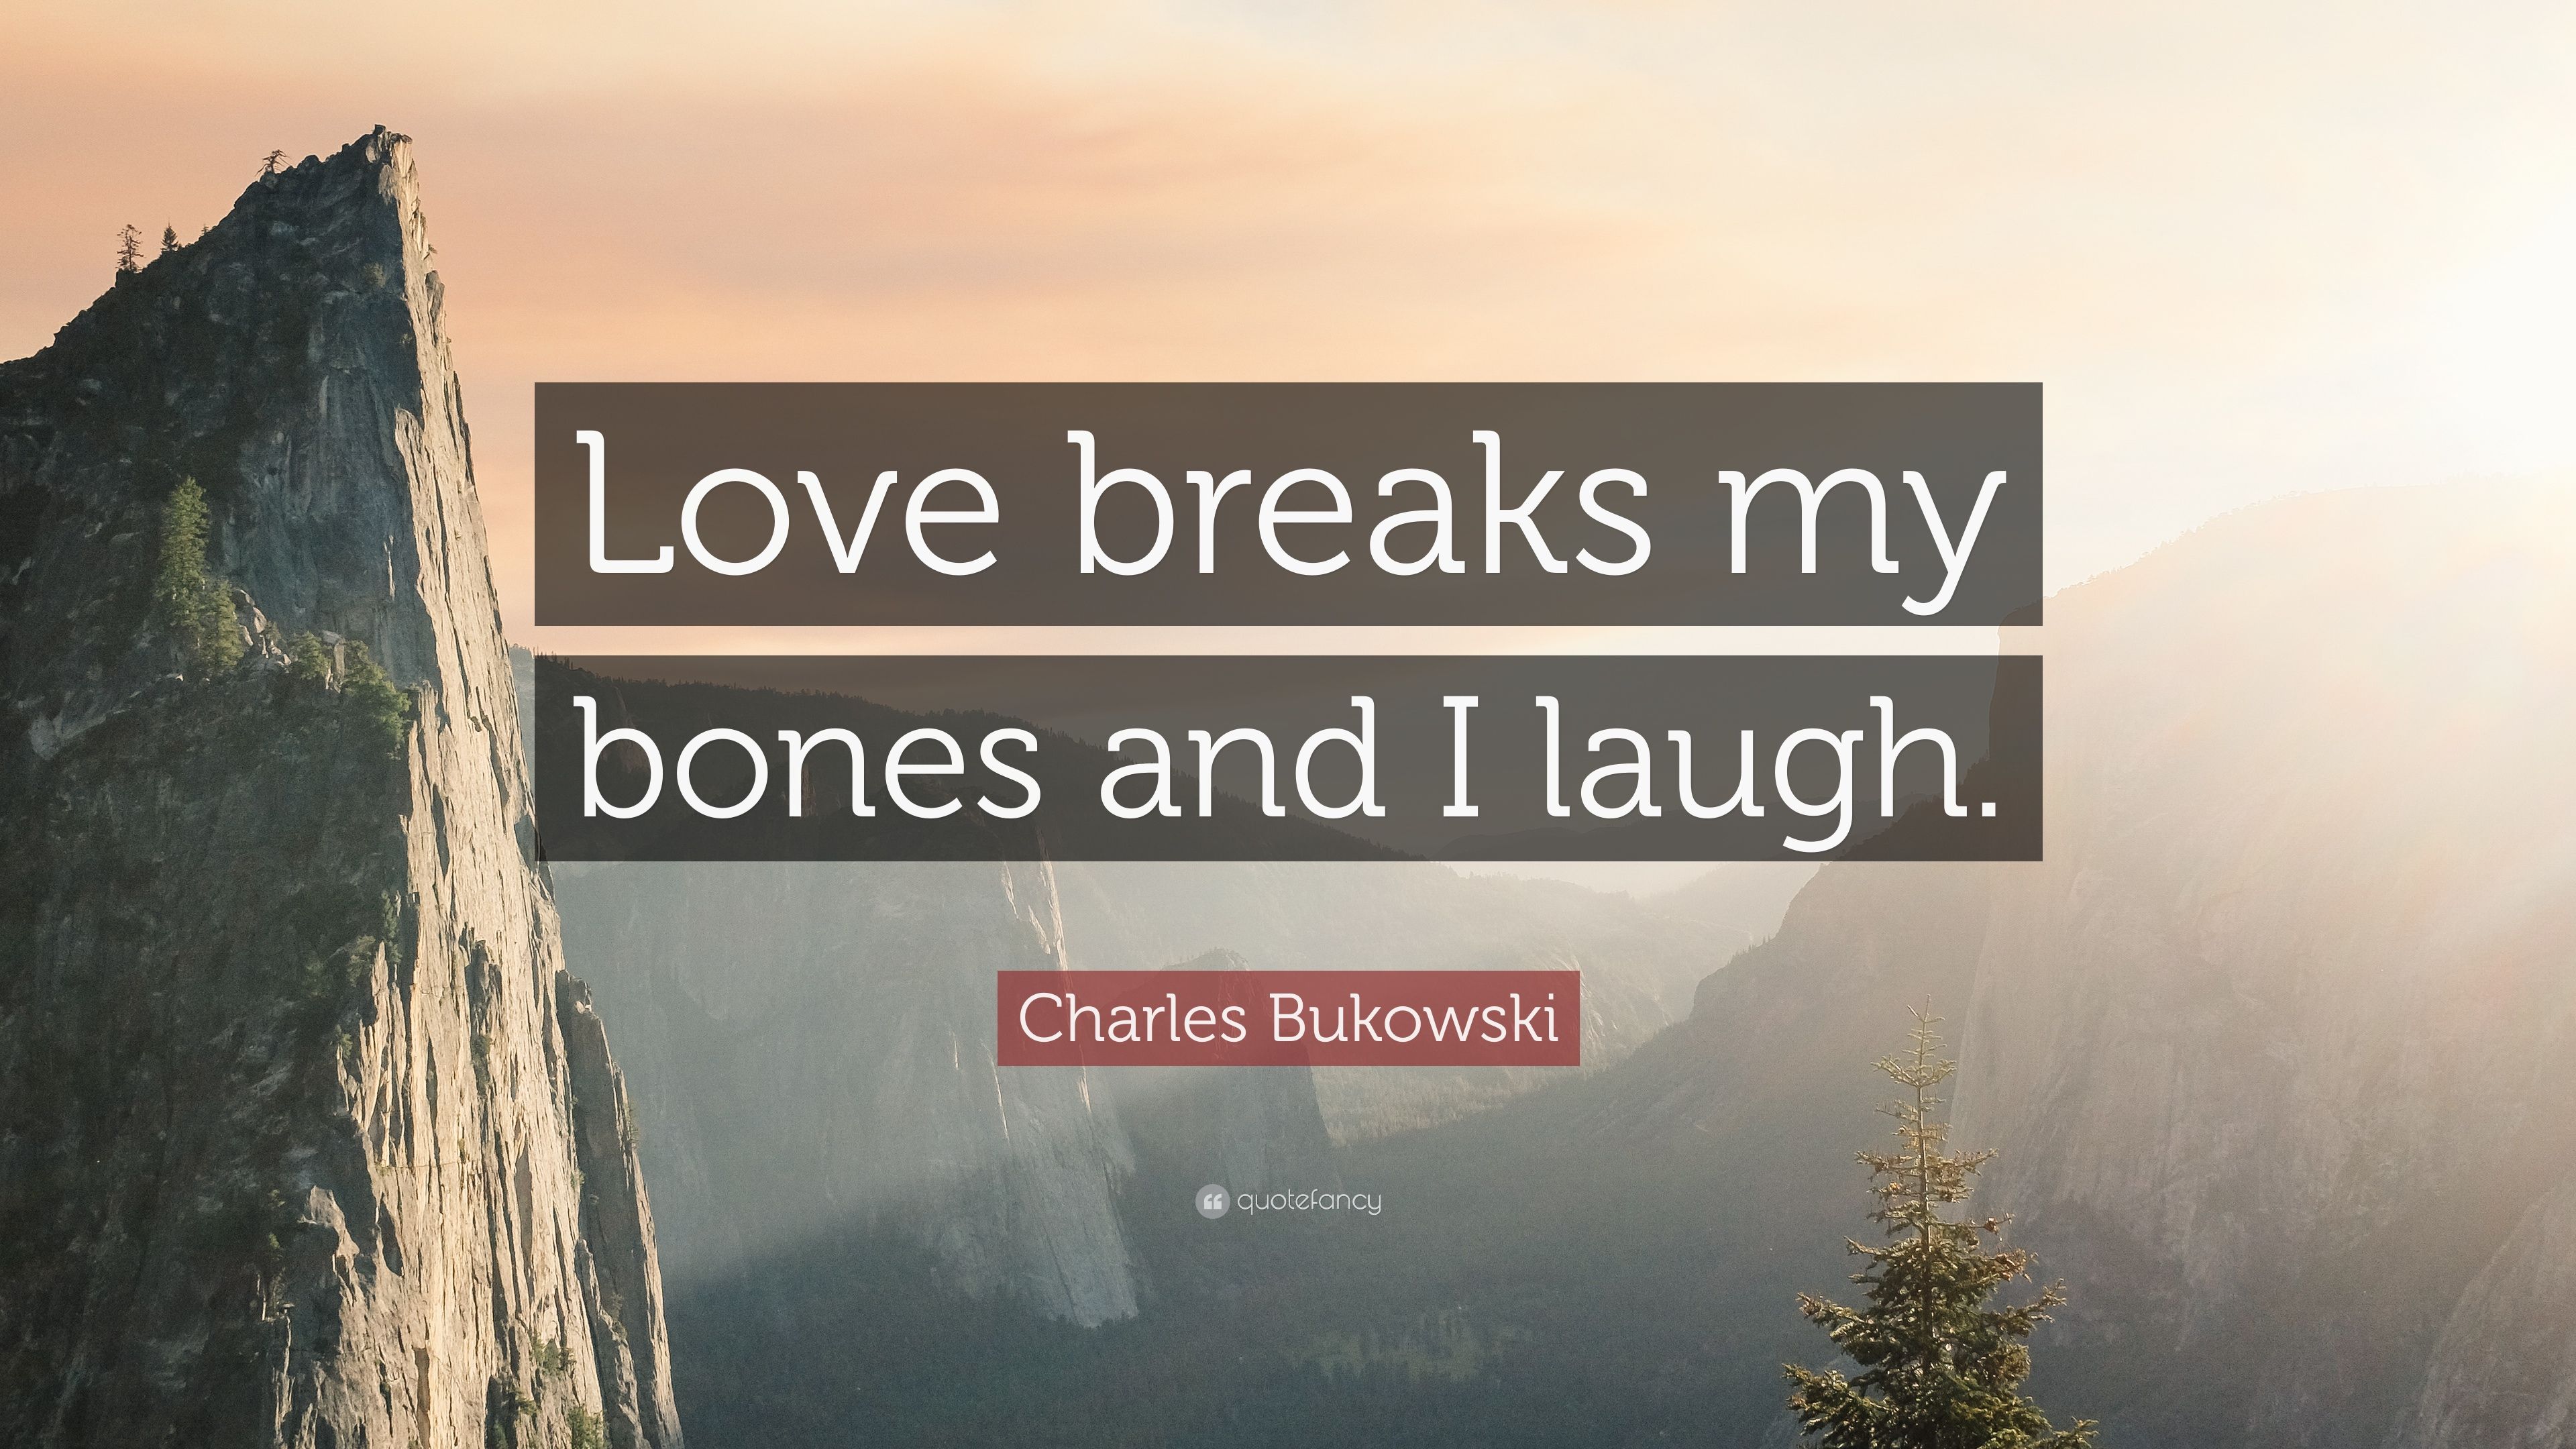 Charles Bukowski Quote: “Love breaks my bones and I laugh.” 12